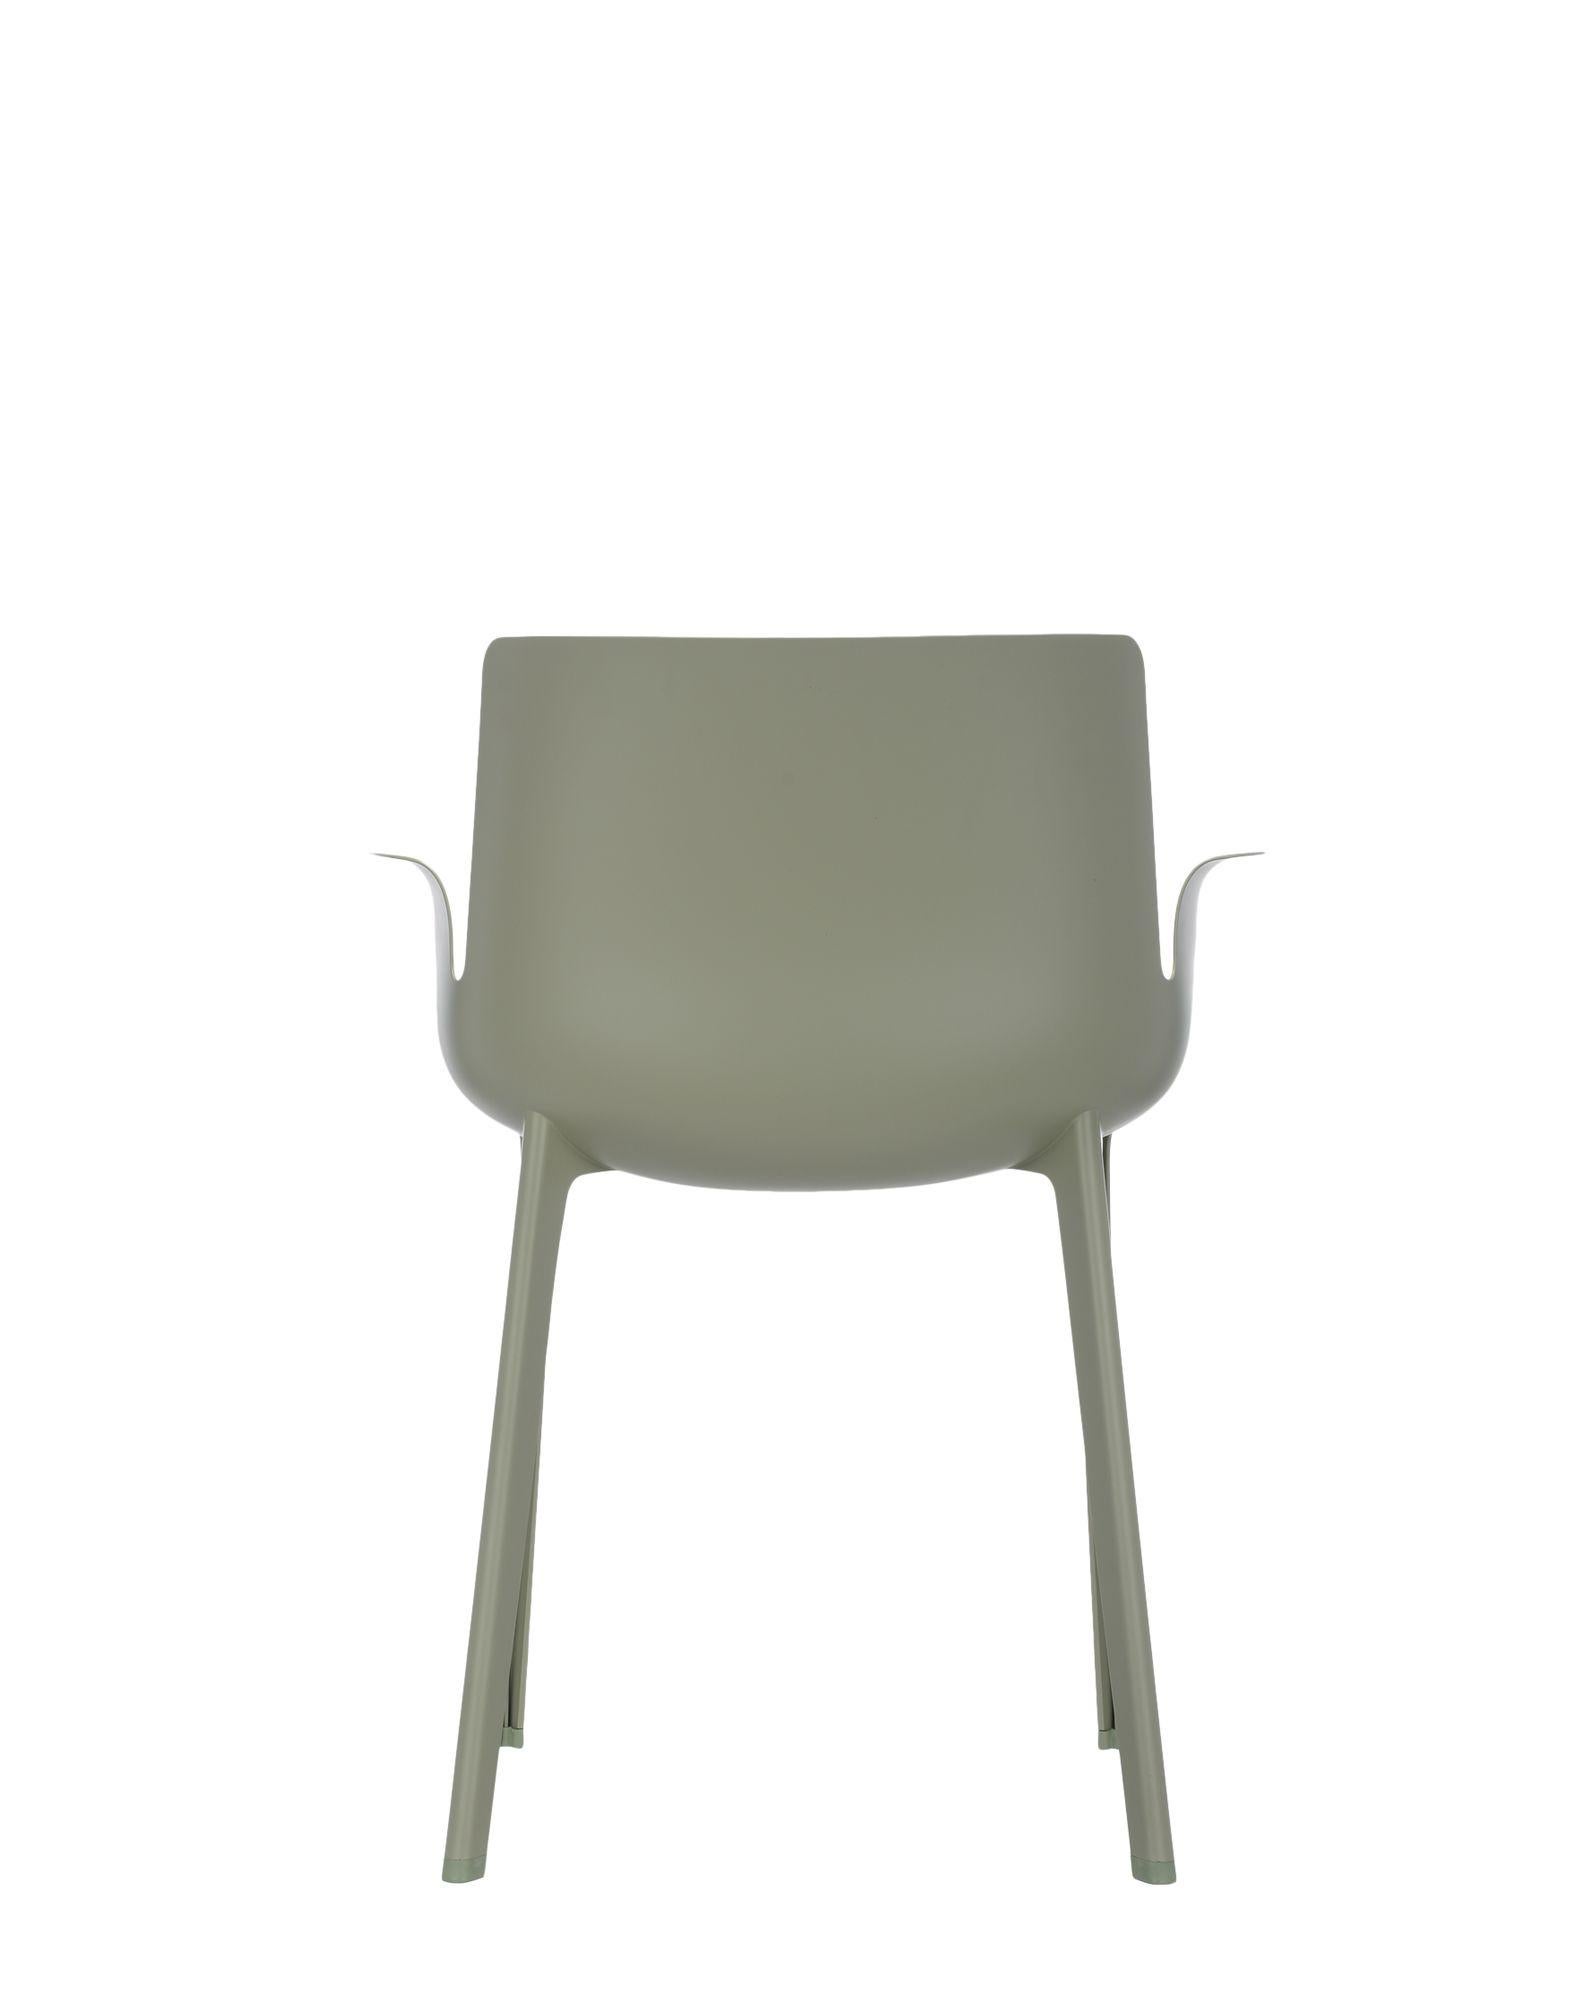 Italian Kartell Piuma Chair in Sage by Piero Lissoni For Sale